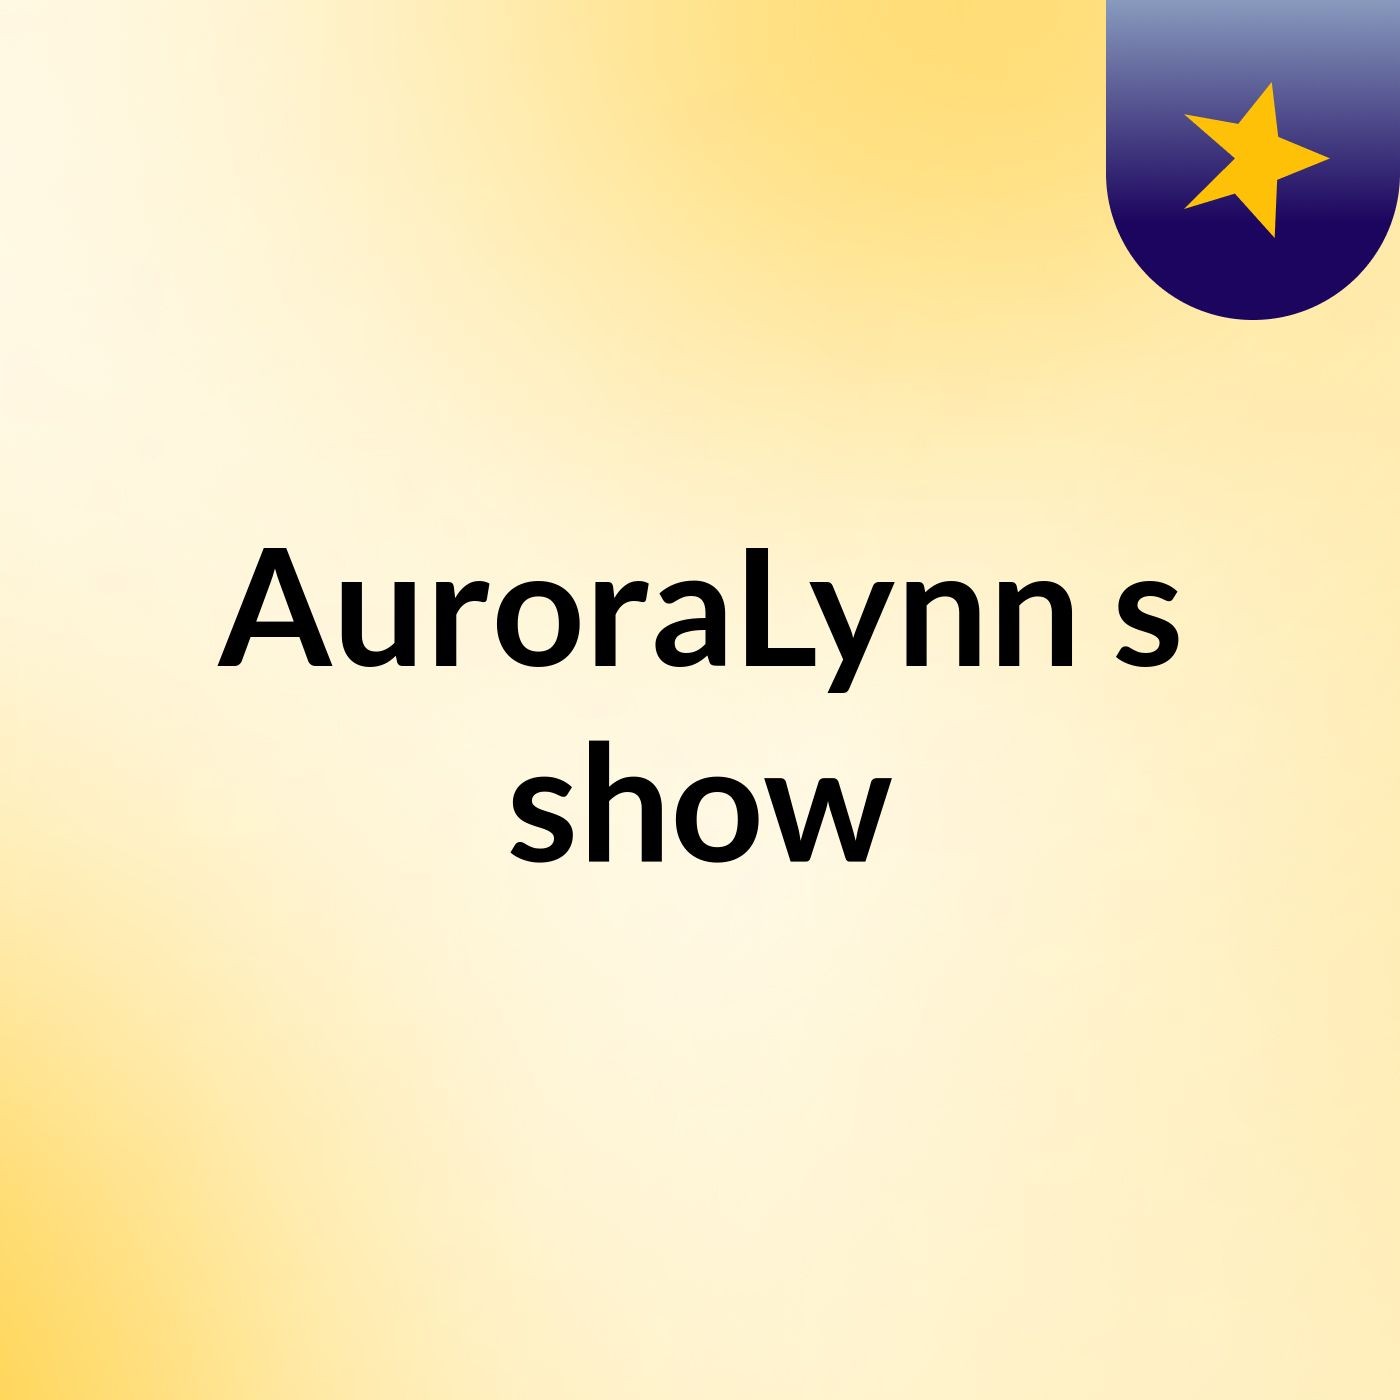 AuroraLynn's show